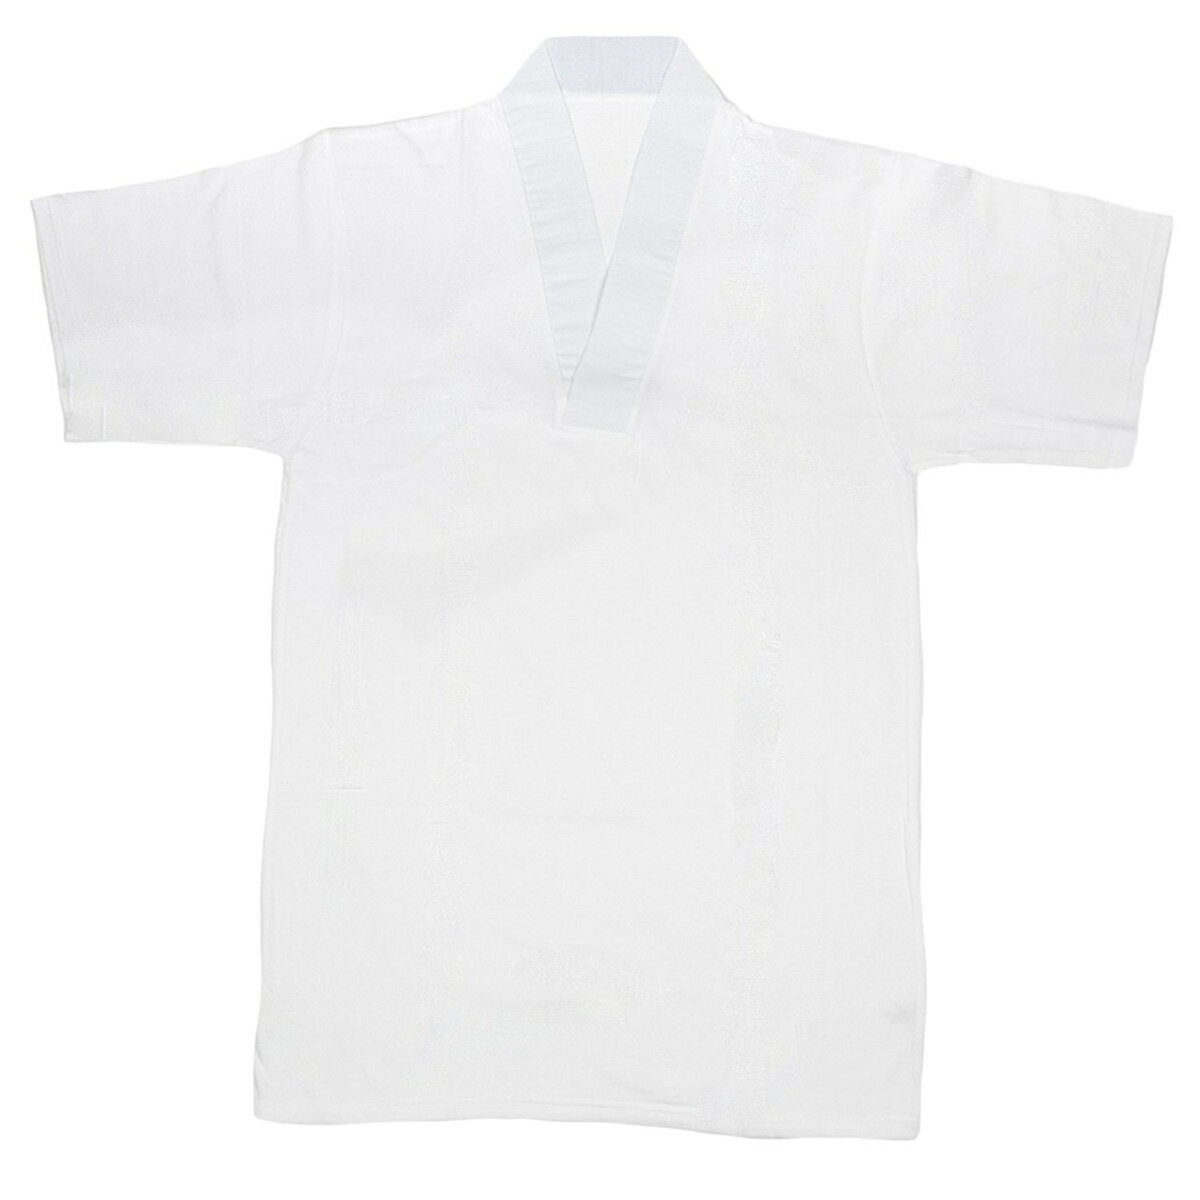 (Tシャツ半襦袢 絽 日) KYOETSU キョウエツ 半襦袢 日本製 男性 洗える メンズ 夏用 絽 襦袢 男 和装 着物 下着